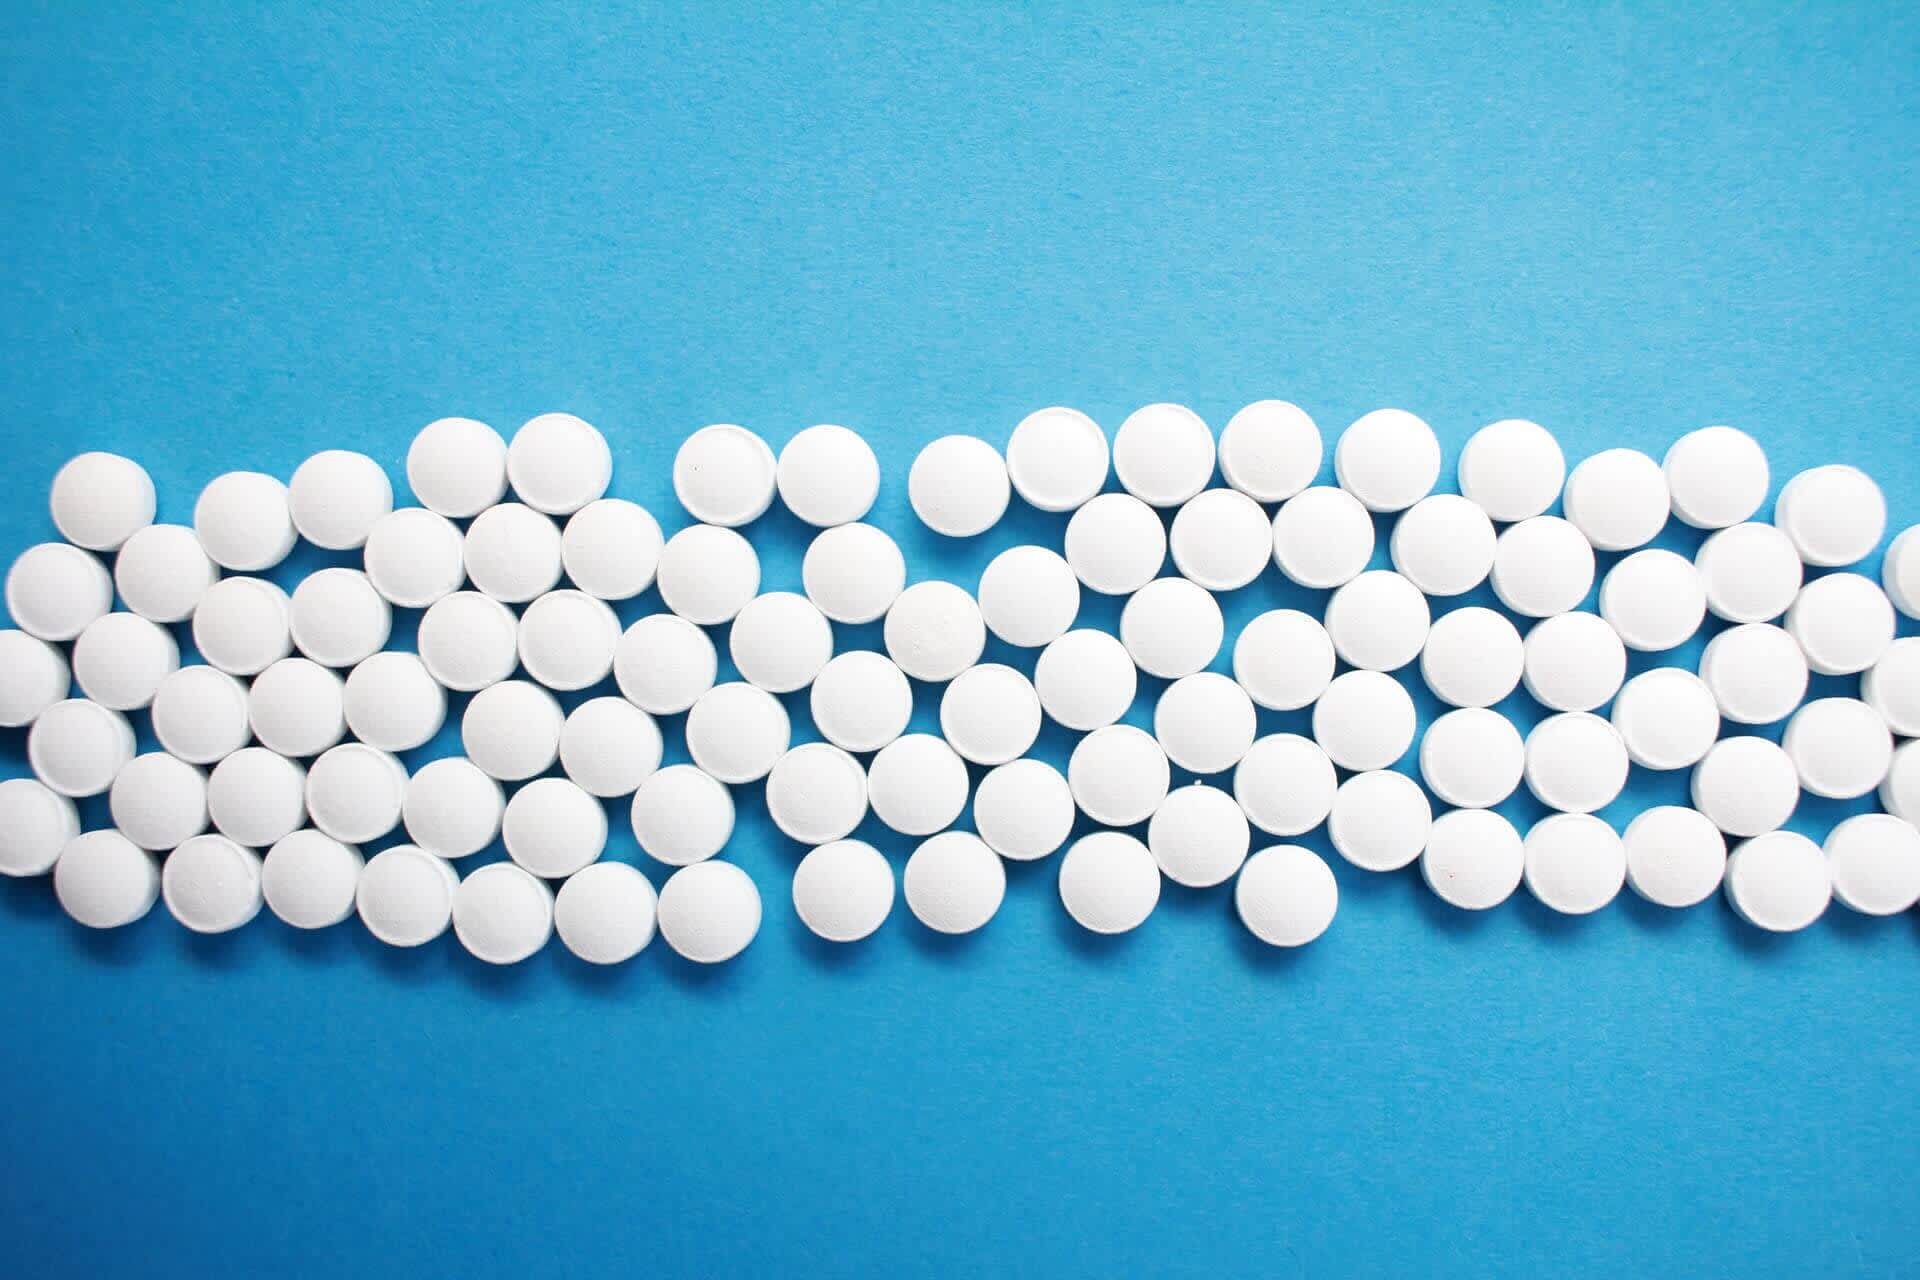 Round claritin white pills with blue background